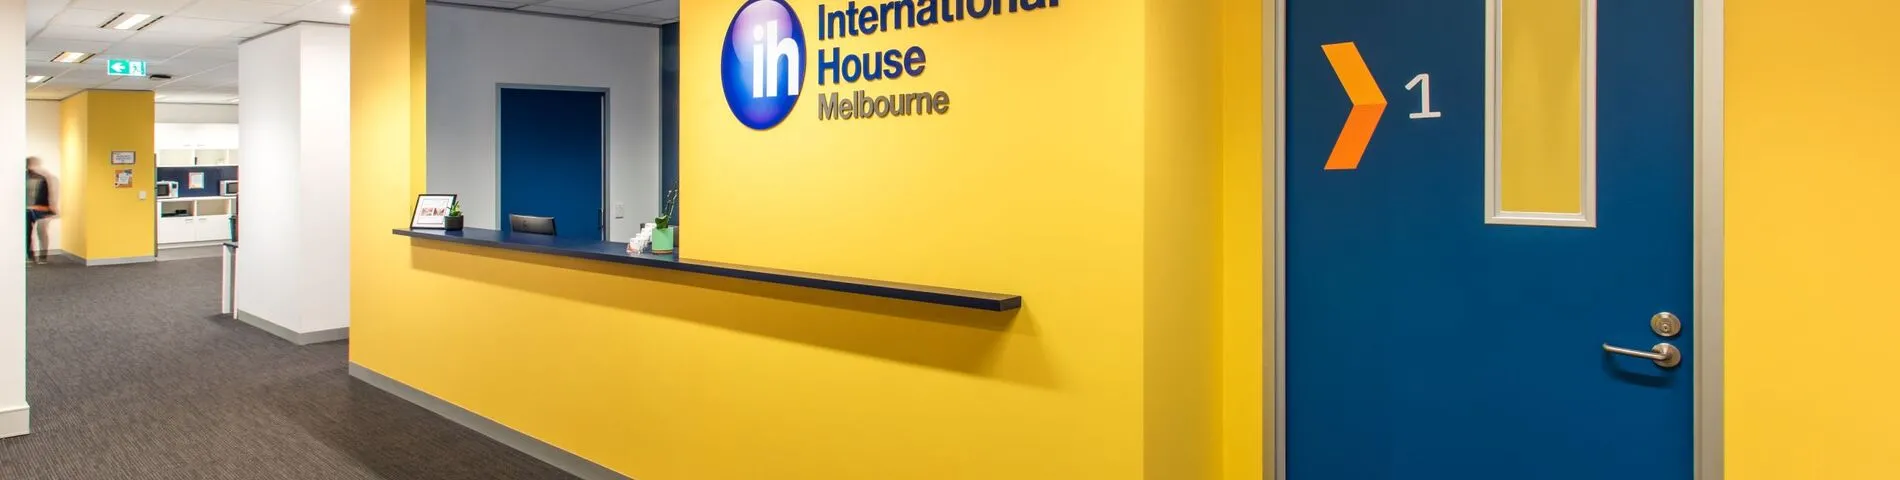 International House รูปภาพ 1